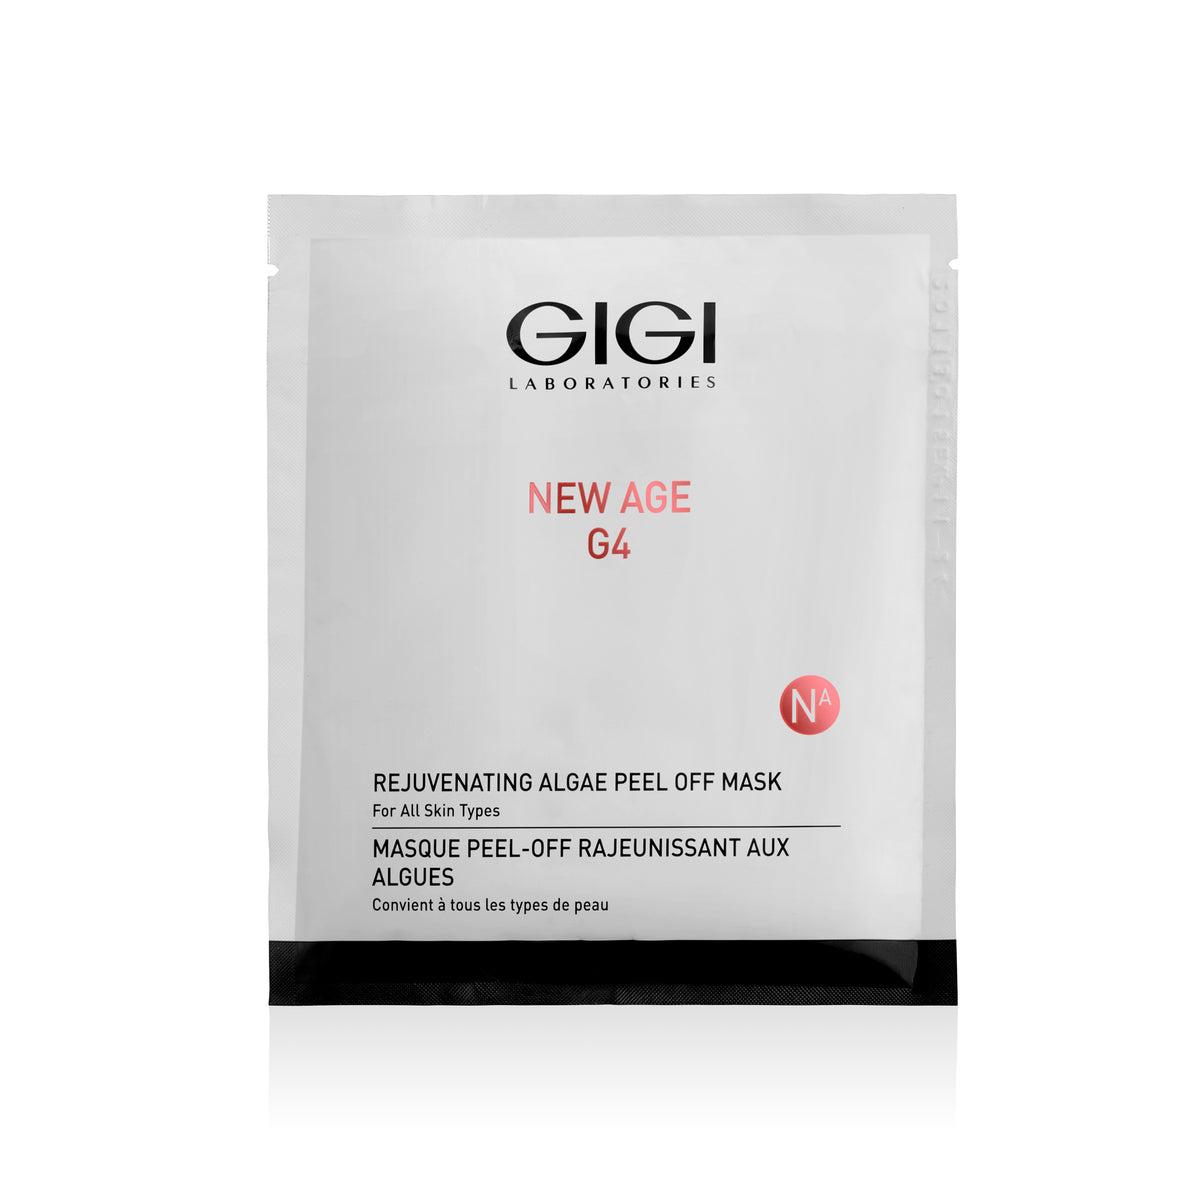 New Age G4 Rejuvenating Algae Peel-Off Mask